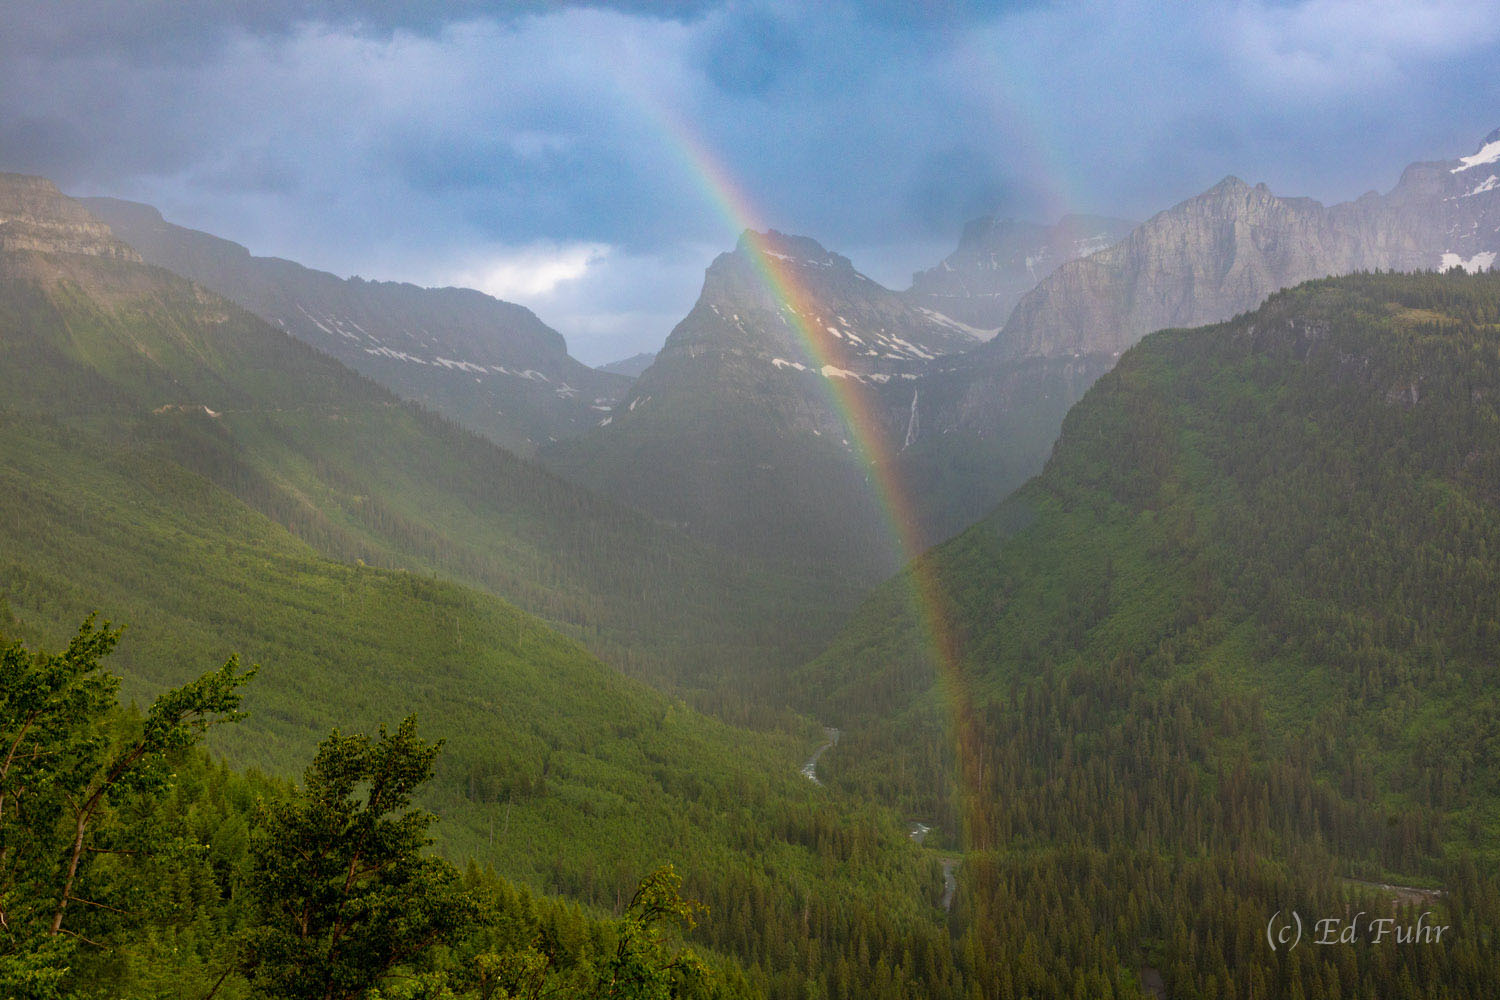 A rainbow emerges above Bird Woman Falls after a quick summer storm.